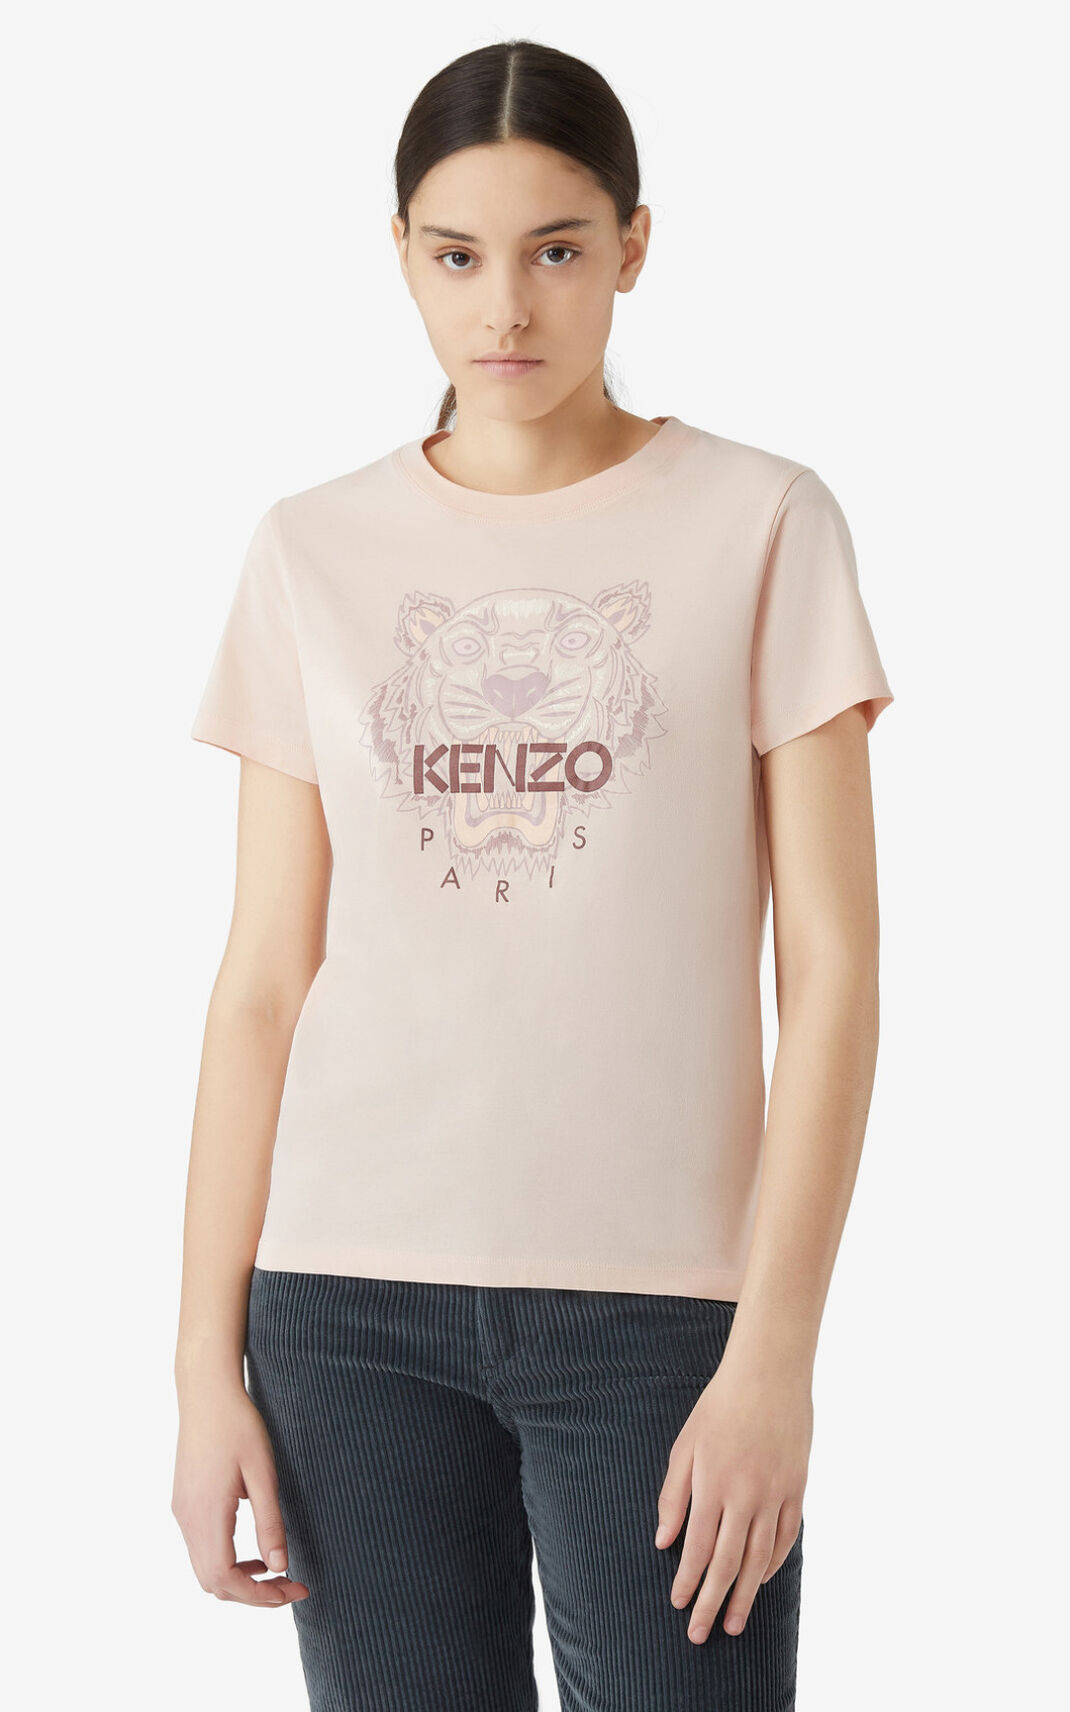 Kenzo 虎 Tシャツ レディース ピンク - SLPOTM670